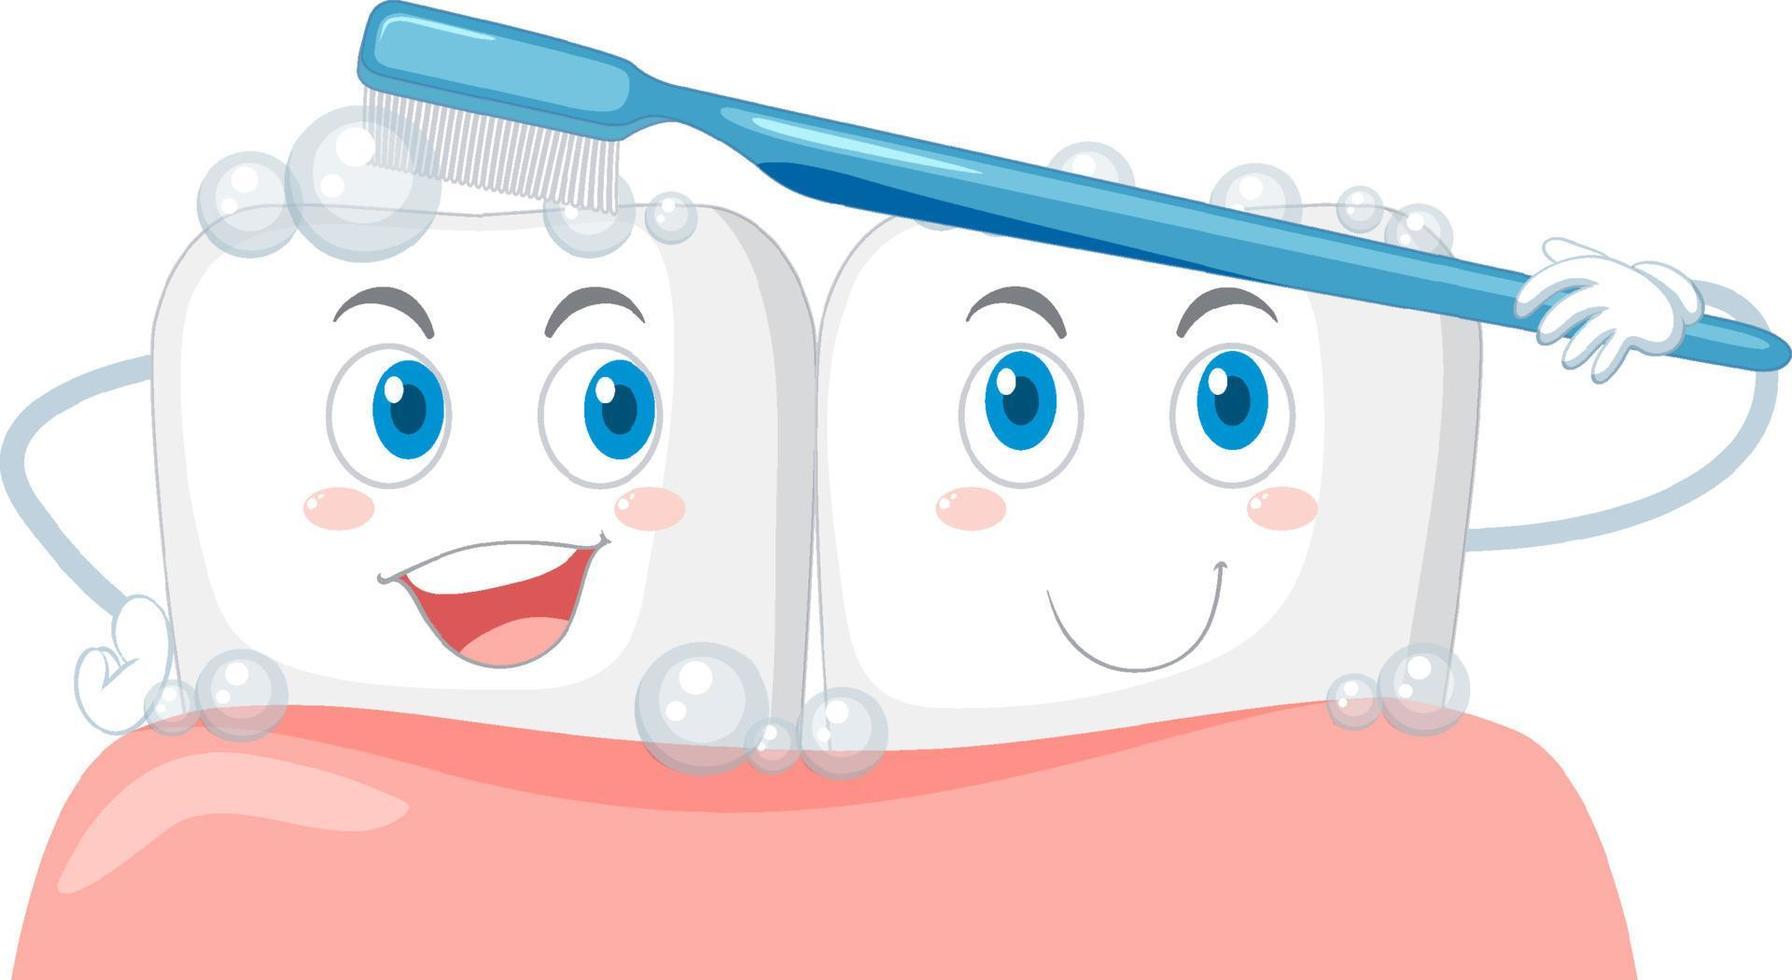 Happy teeth brushing itself  on white background vector